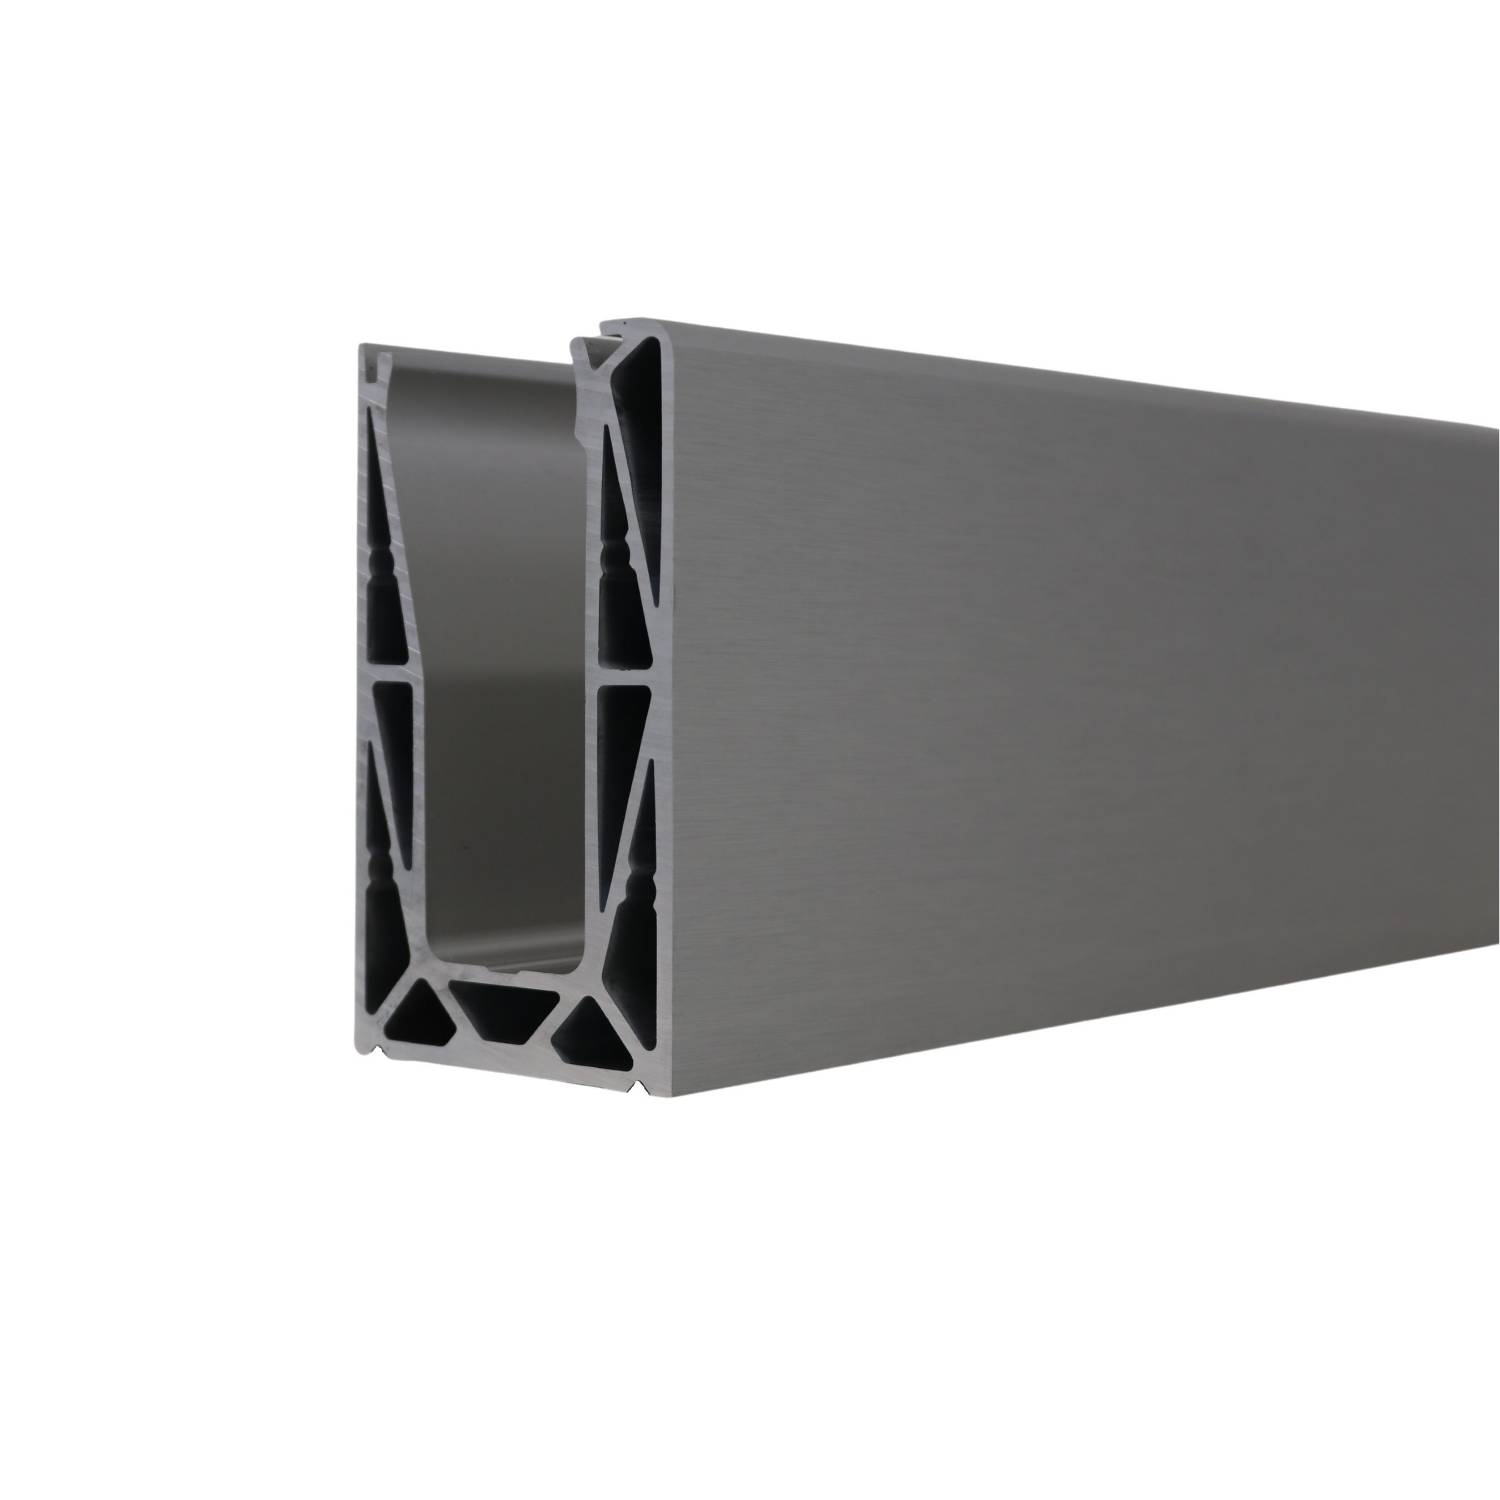 R-LOCK one-side-fit balustrade system - Frameless Glass Balustrade one-side-fit